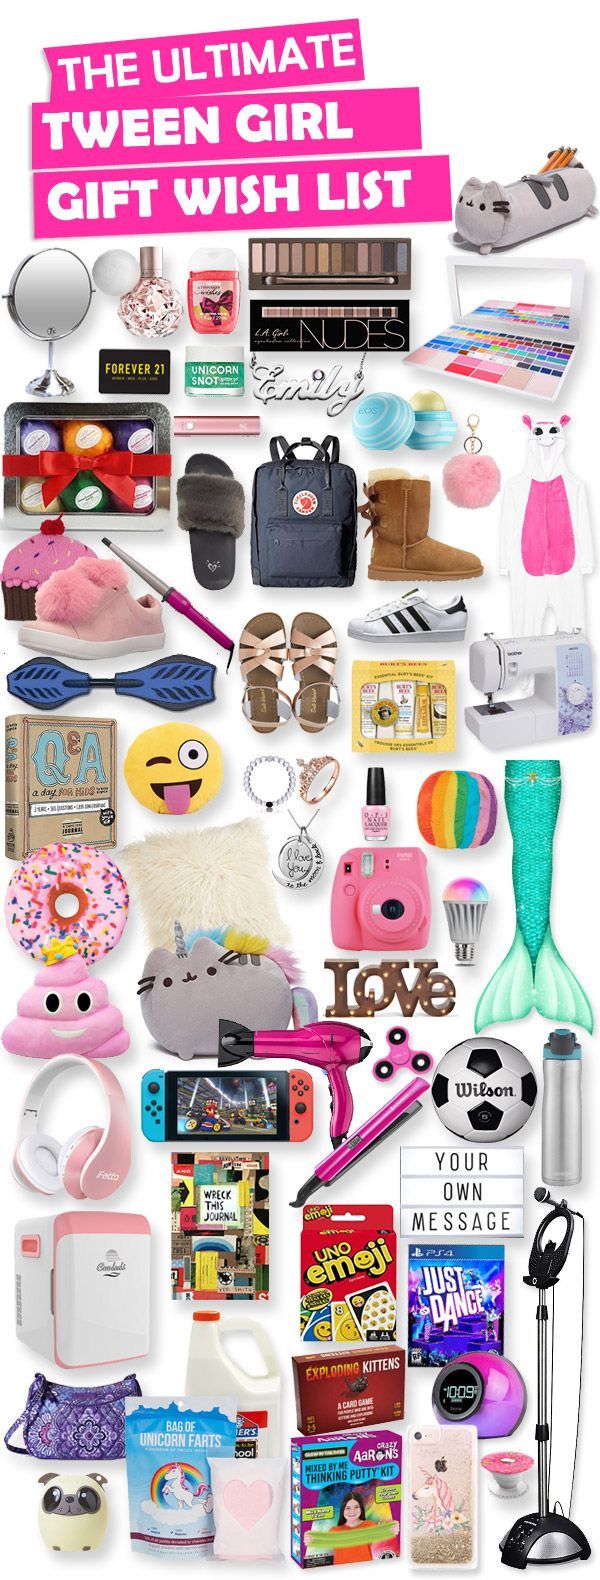 Tween Girl Birthday Gift Ideas
 7 best Gifts For Tween Girls images on Pinterest